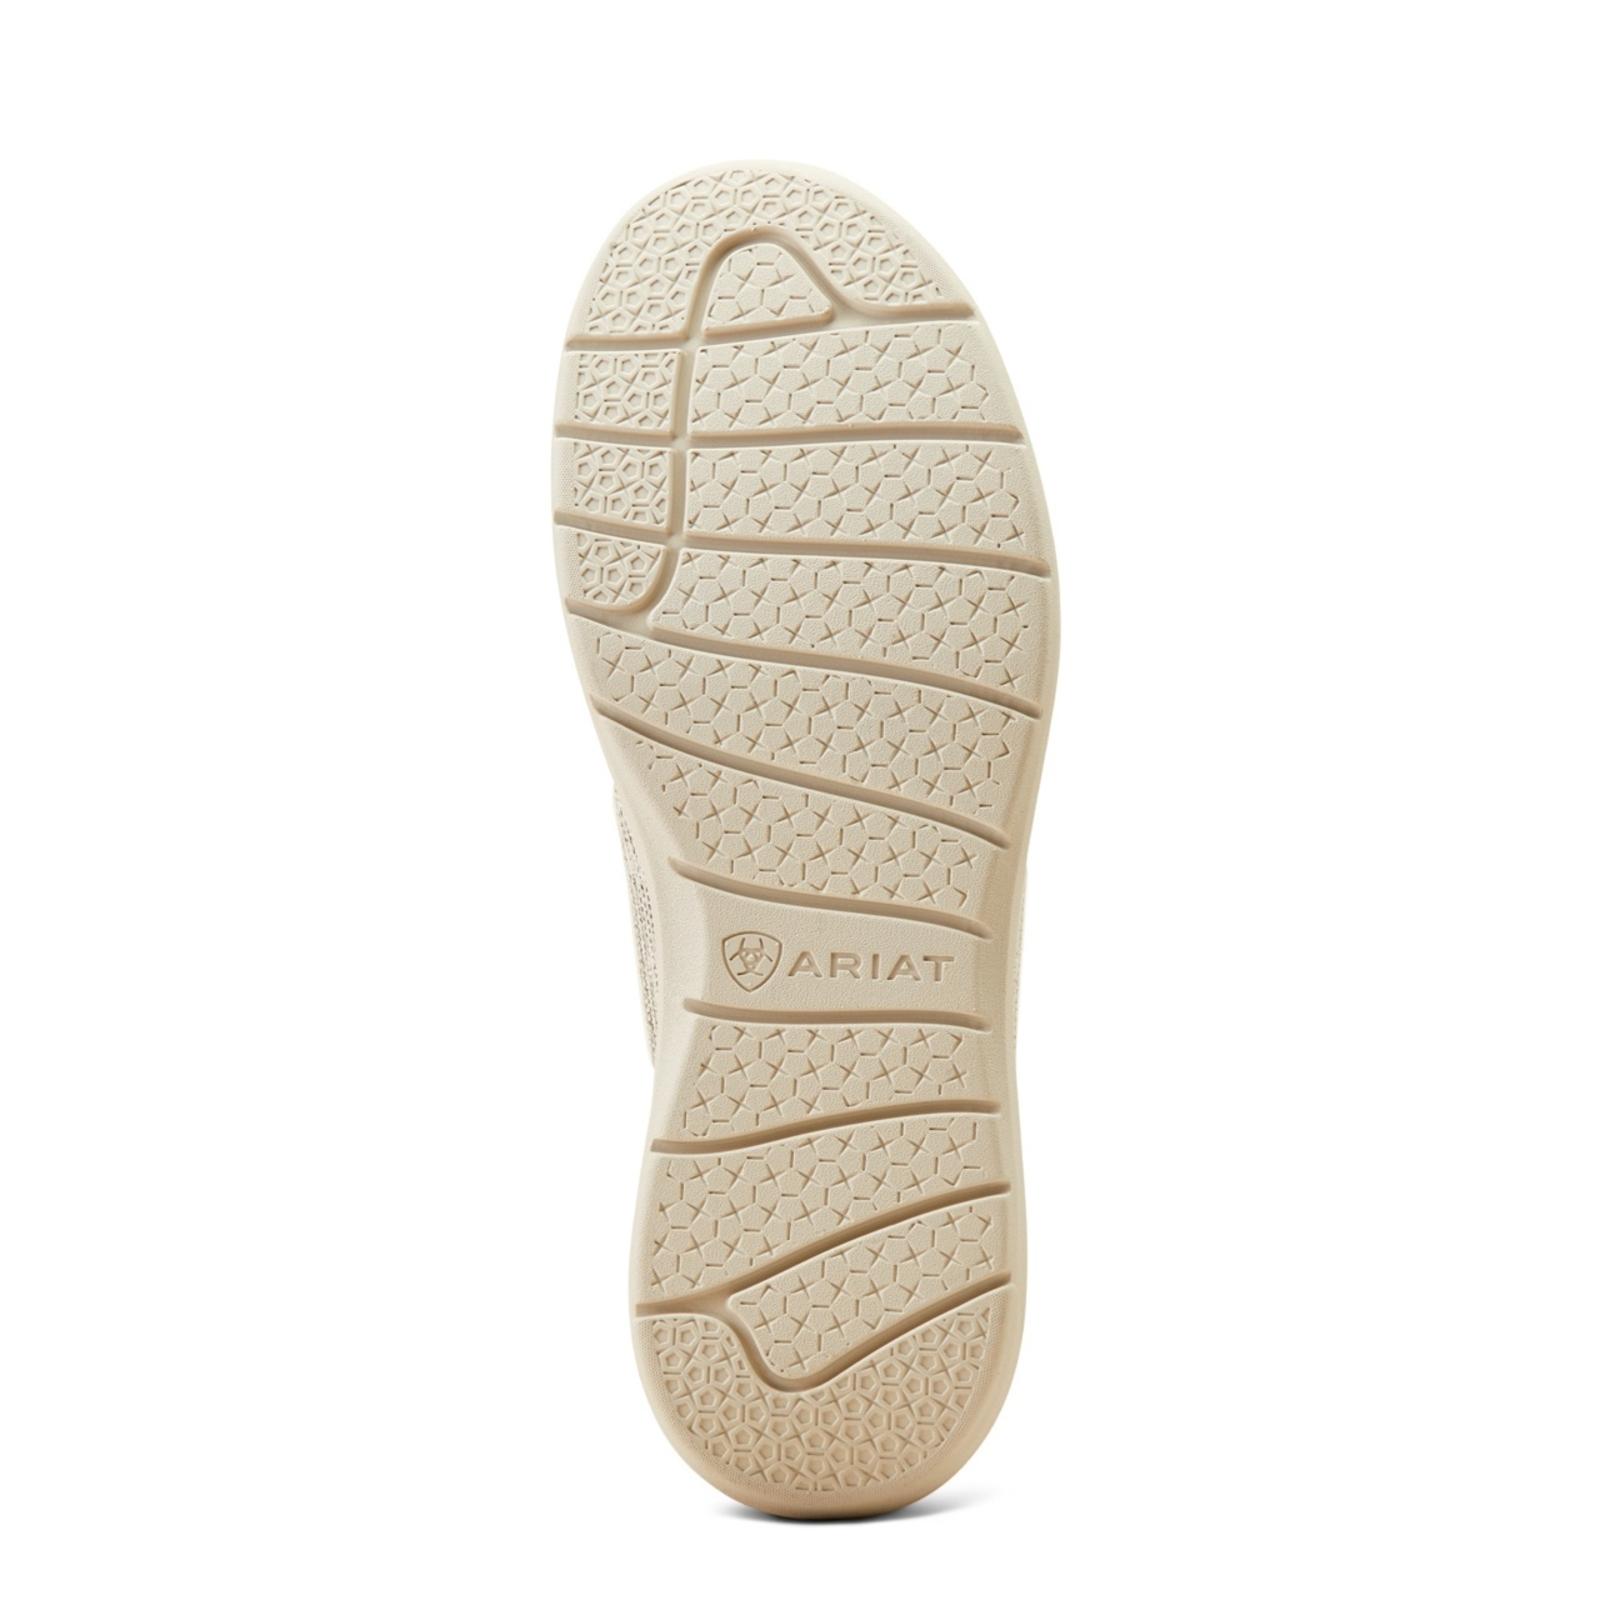 Heathered White sole